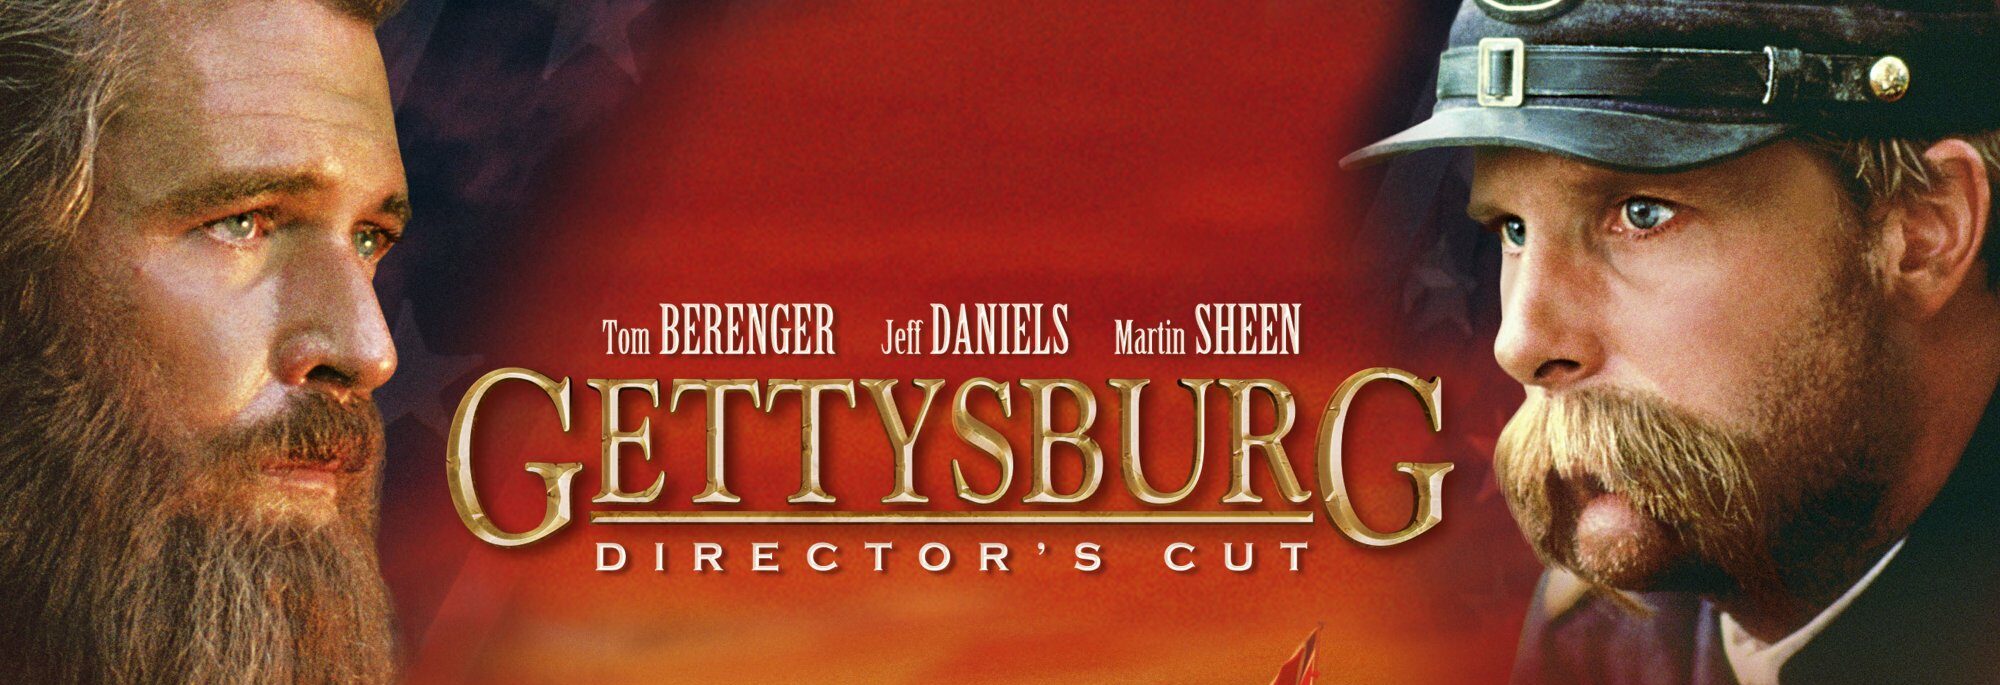 Gettysburg Film Directors Cut